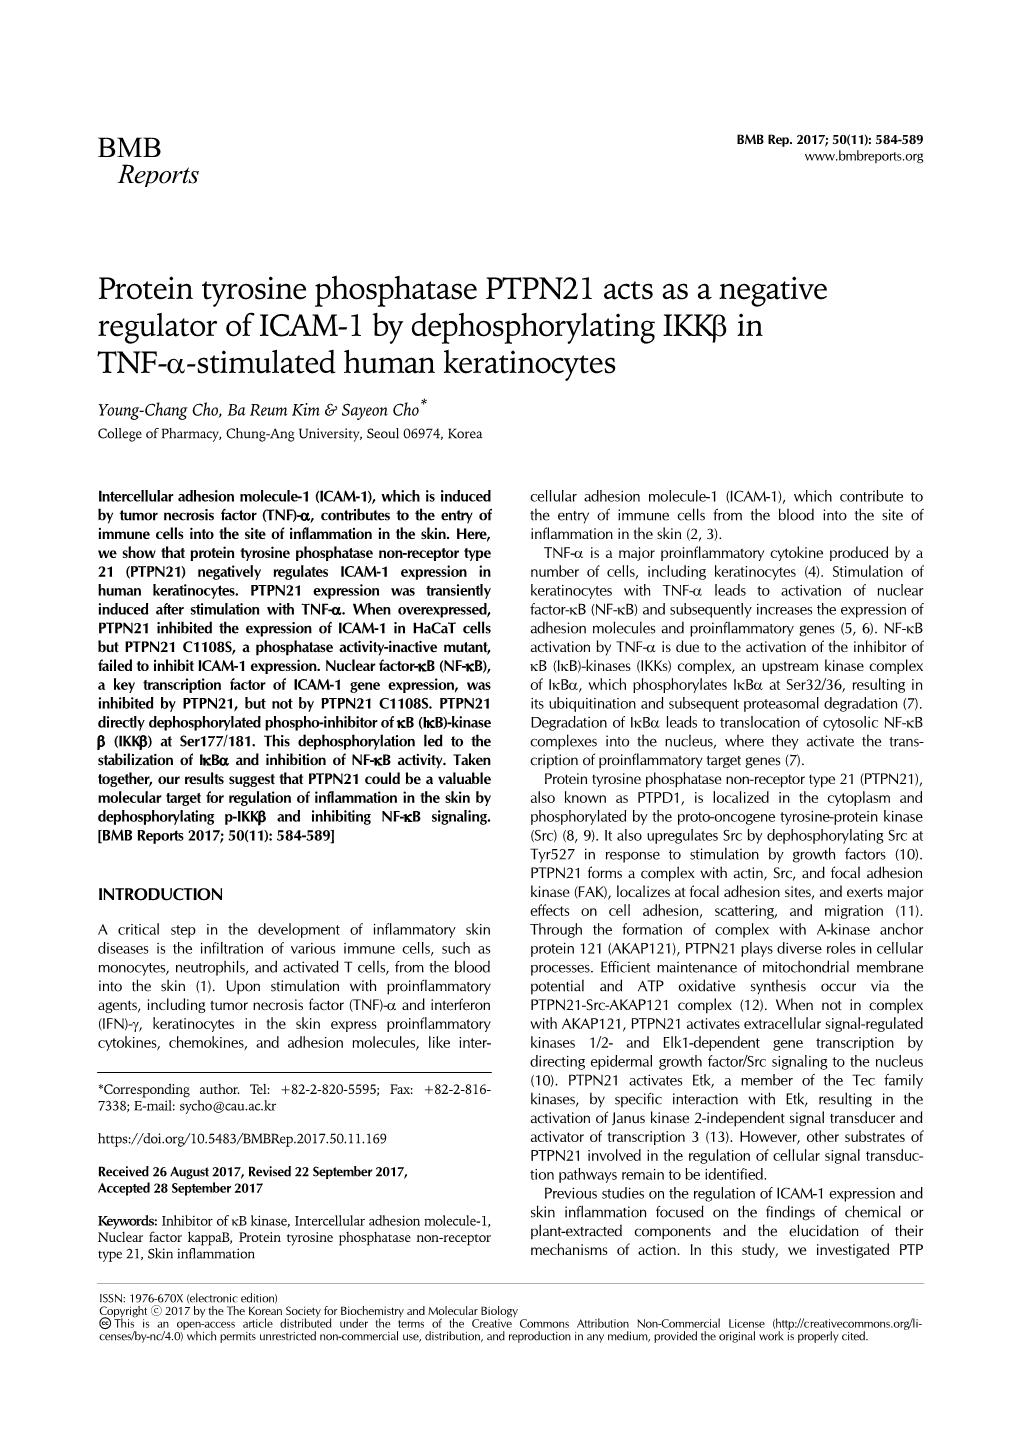 Protein Tyrosine Phosphatase PTPN21 Acts As a Negative Regulator of ICAM-1 by Dephosphorylating IKK in TNF--Stimulated Human Keratinocytes